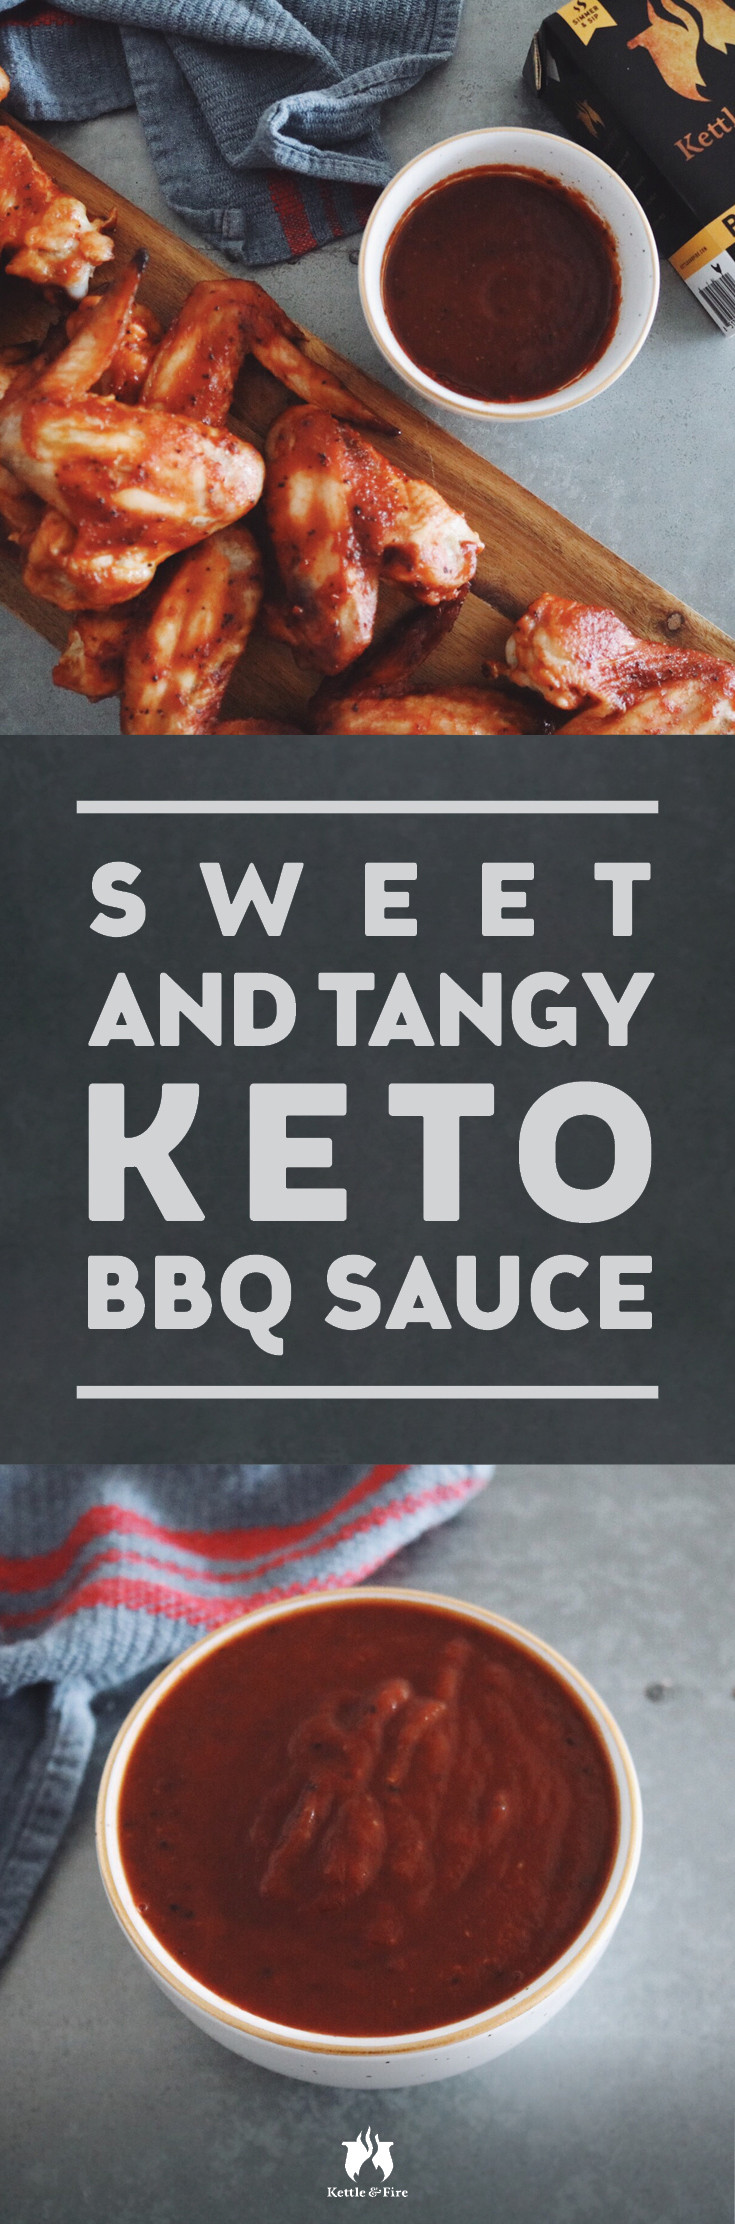 Keto Bbq Sauce
 Sweet and Tangy Keto BBQ Sauce